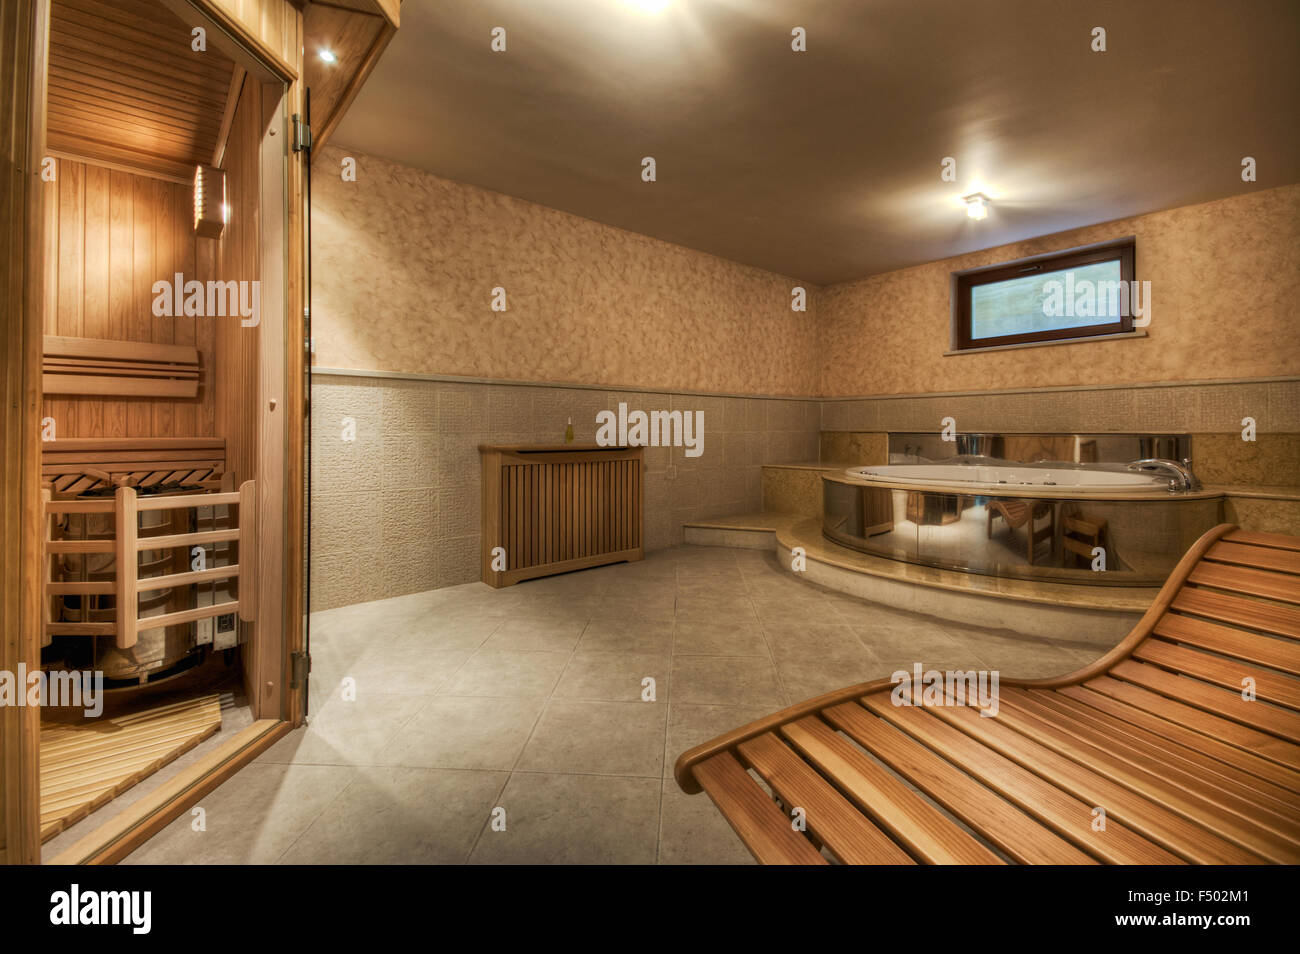 https://c8.alamy.com/comp/F502M1/home-sauna-and-jacuzzi-home-spa-F502M1.jpg